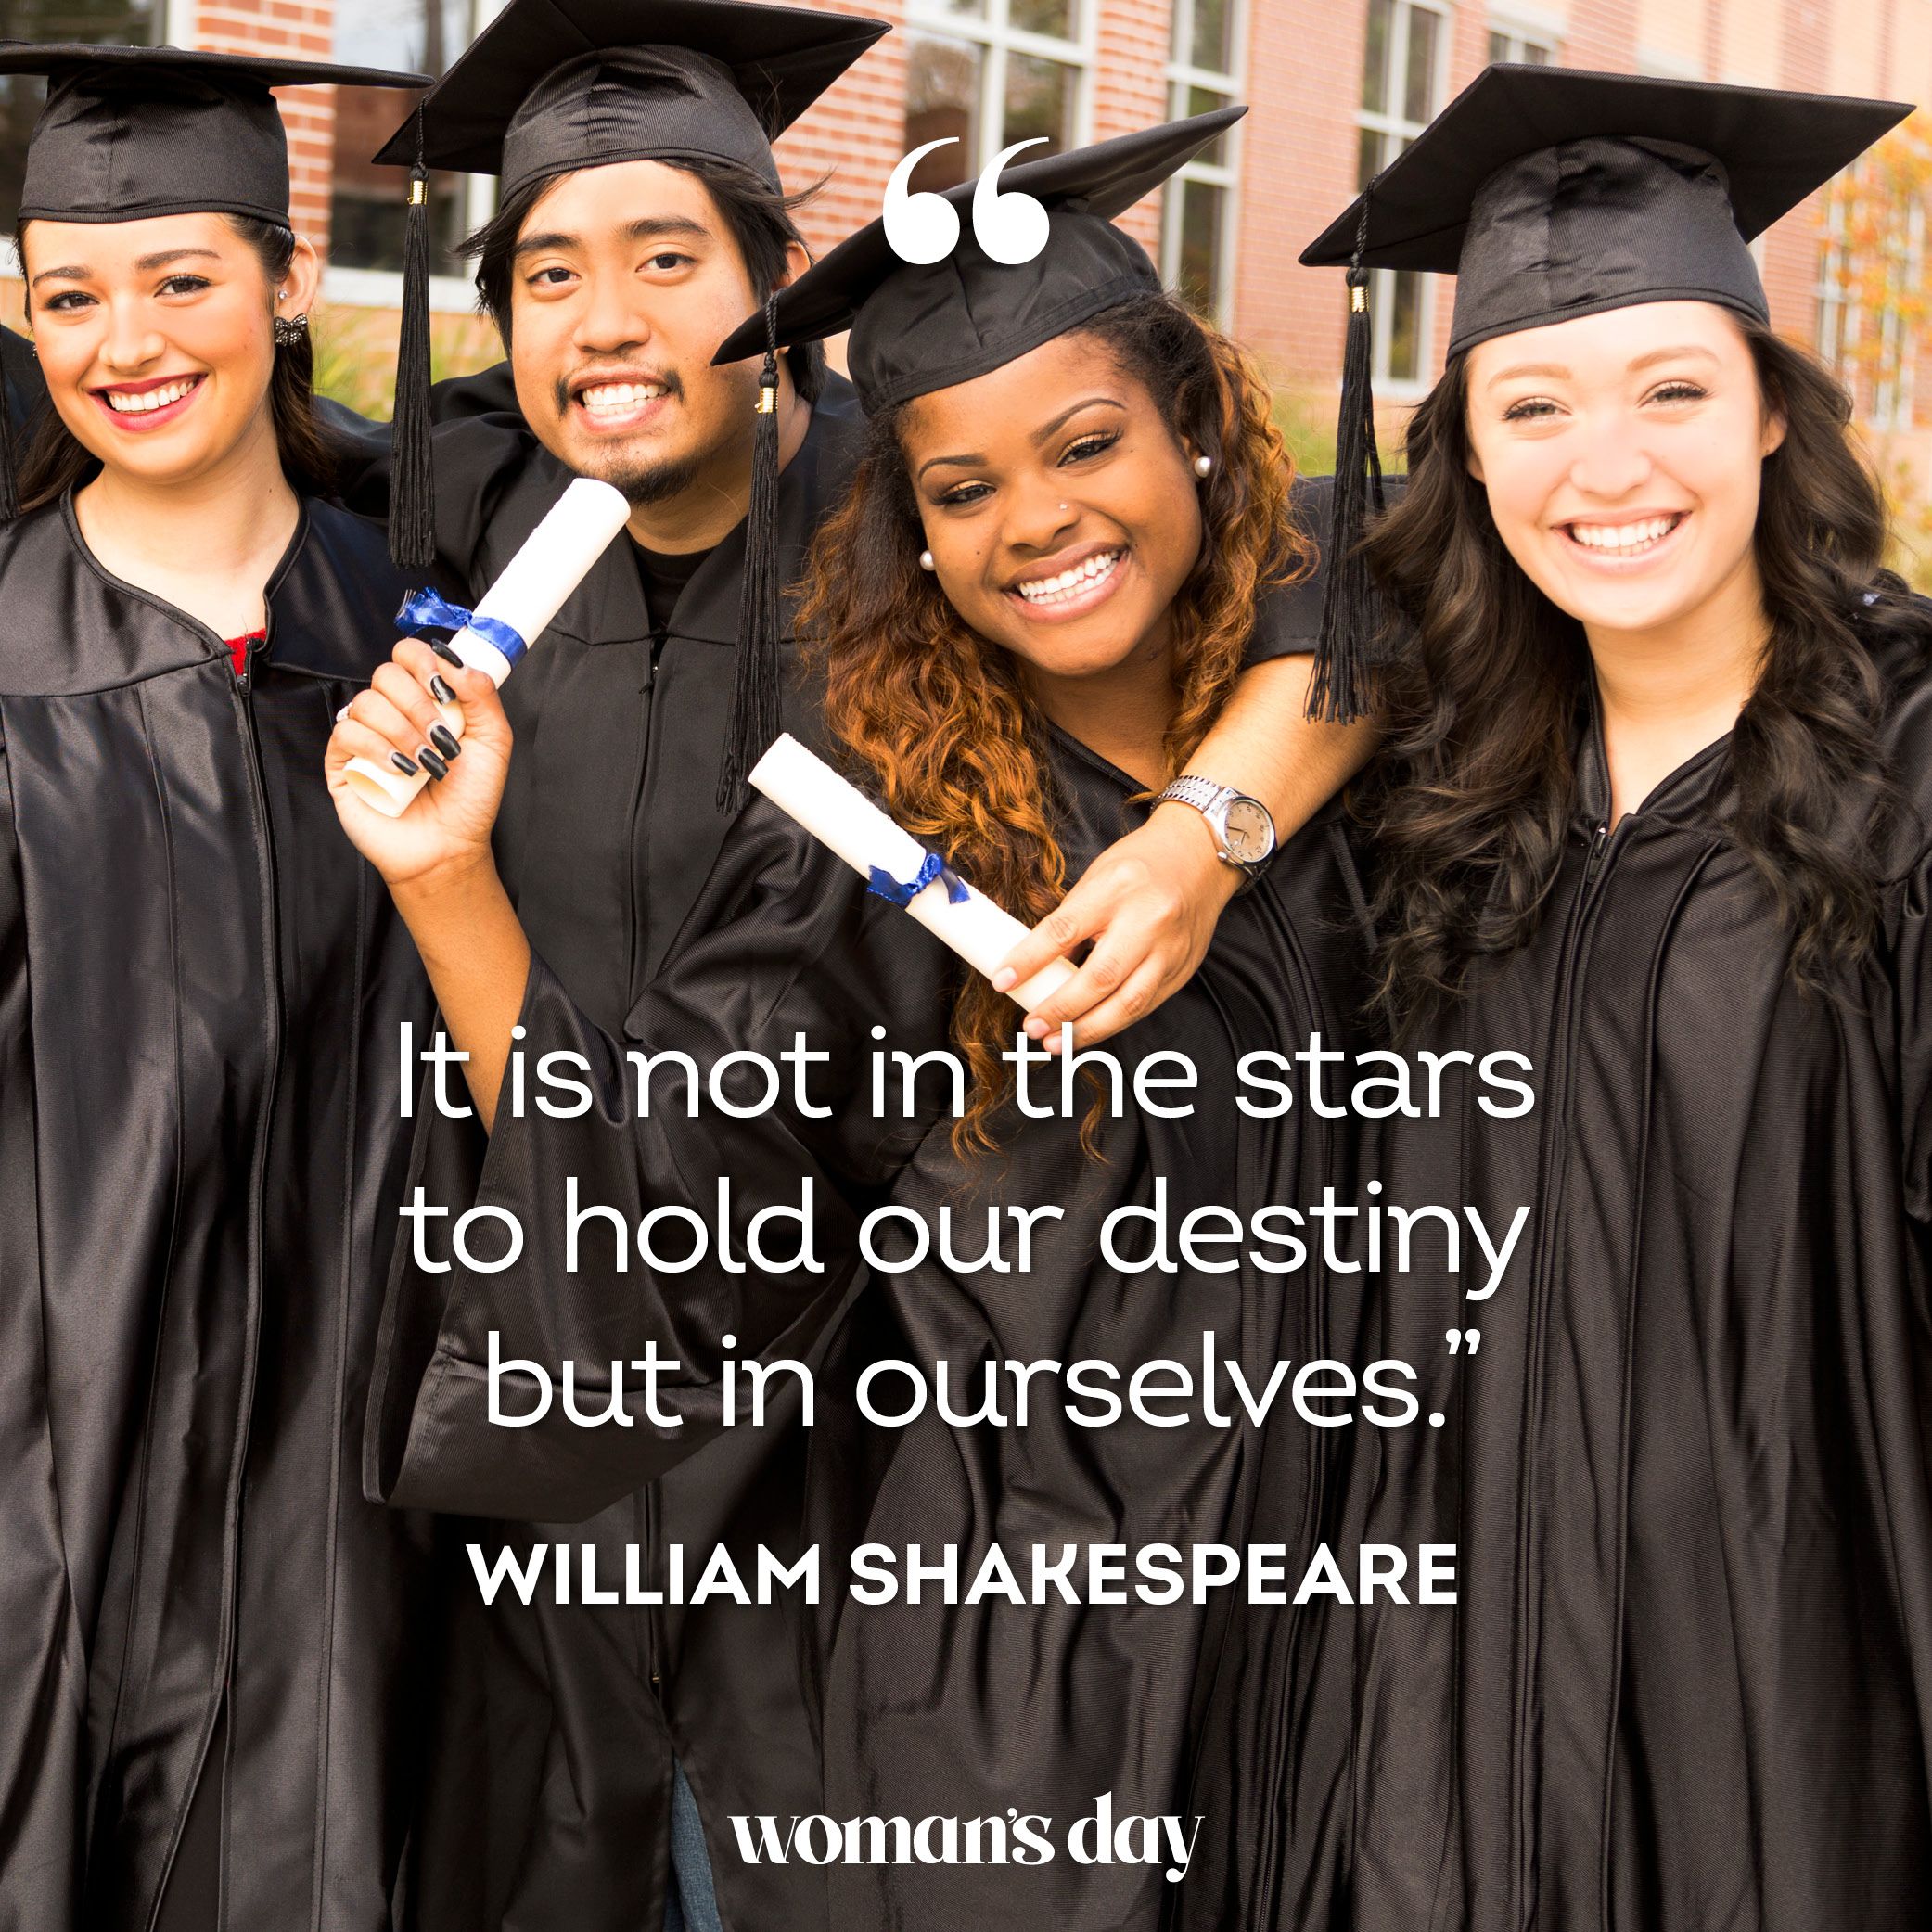 congratulations quotes for graduation university